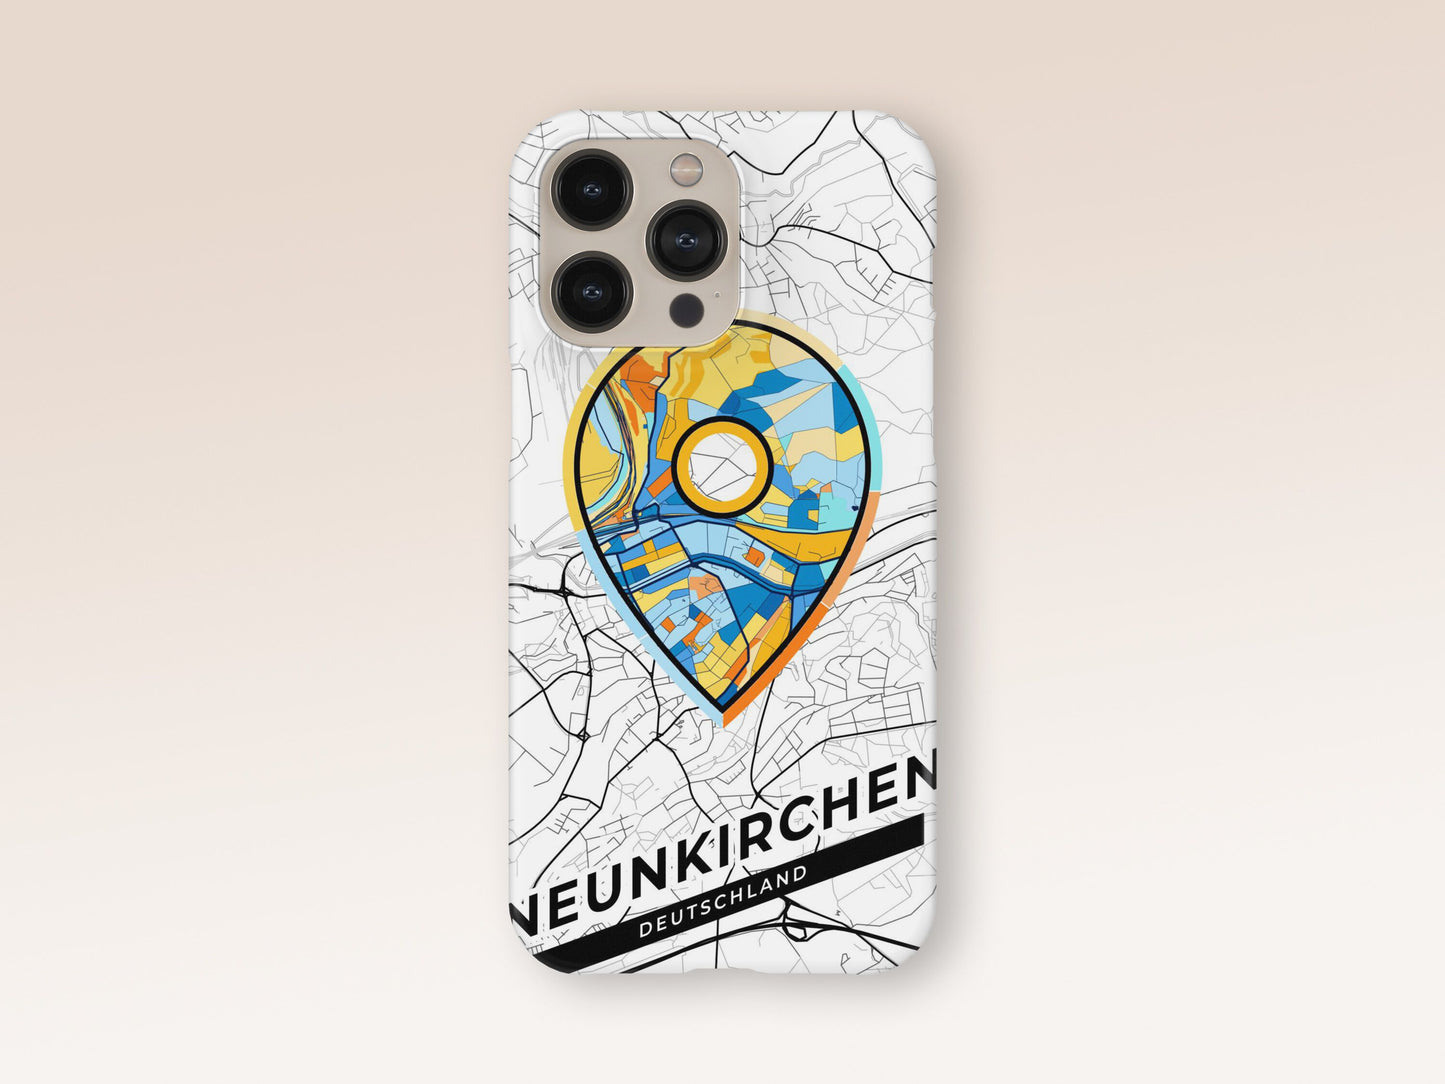 Neunkirchen Deutschland slim phone case with colorful icon. Birthday, wedding or housewarming gift. Couple match cases. 1